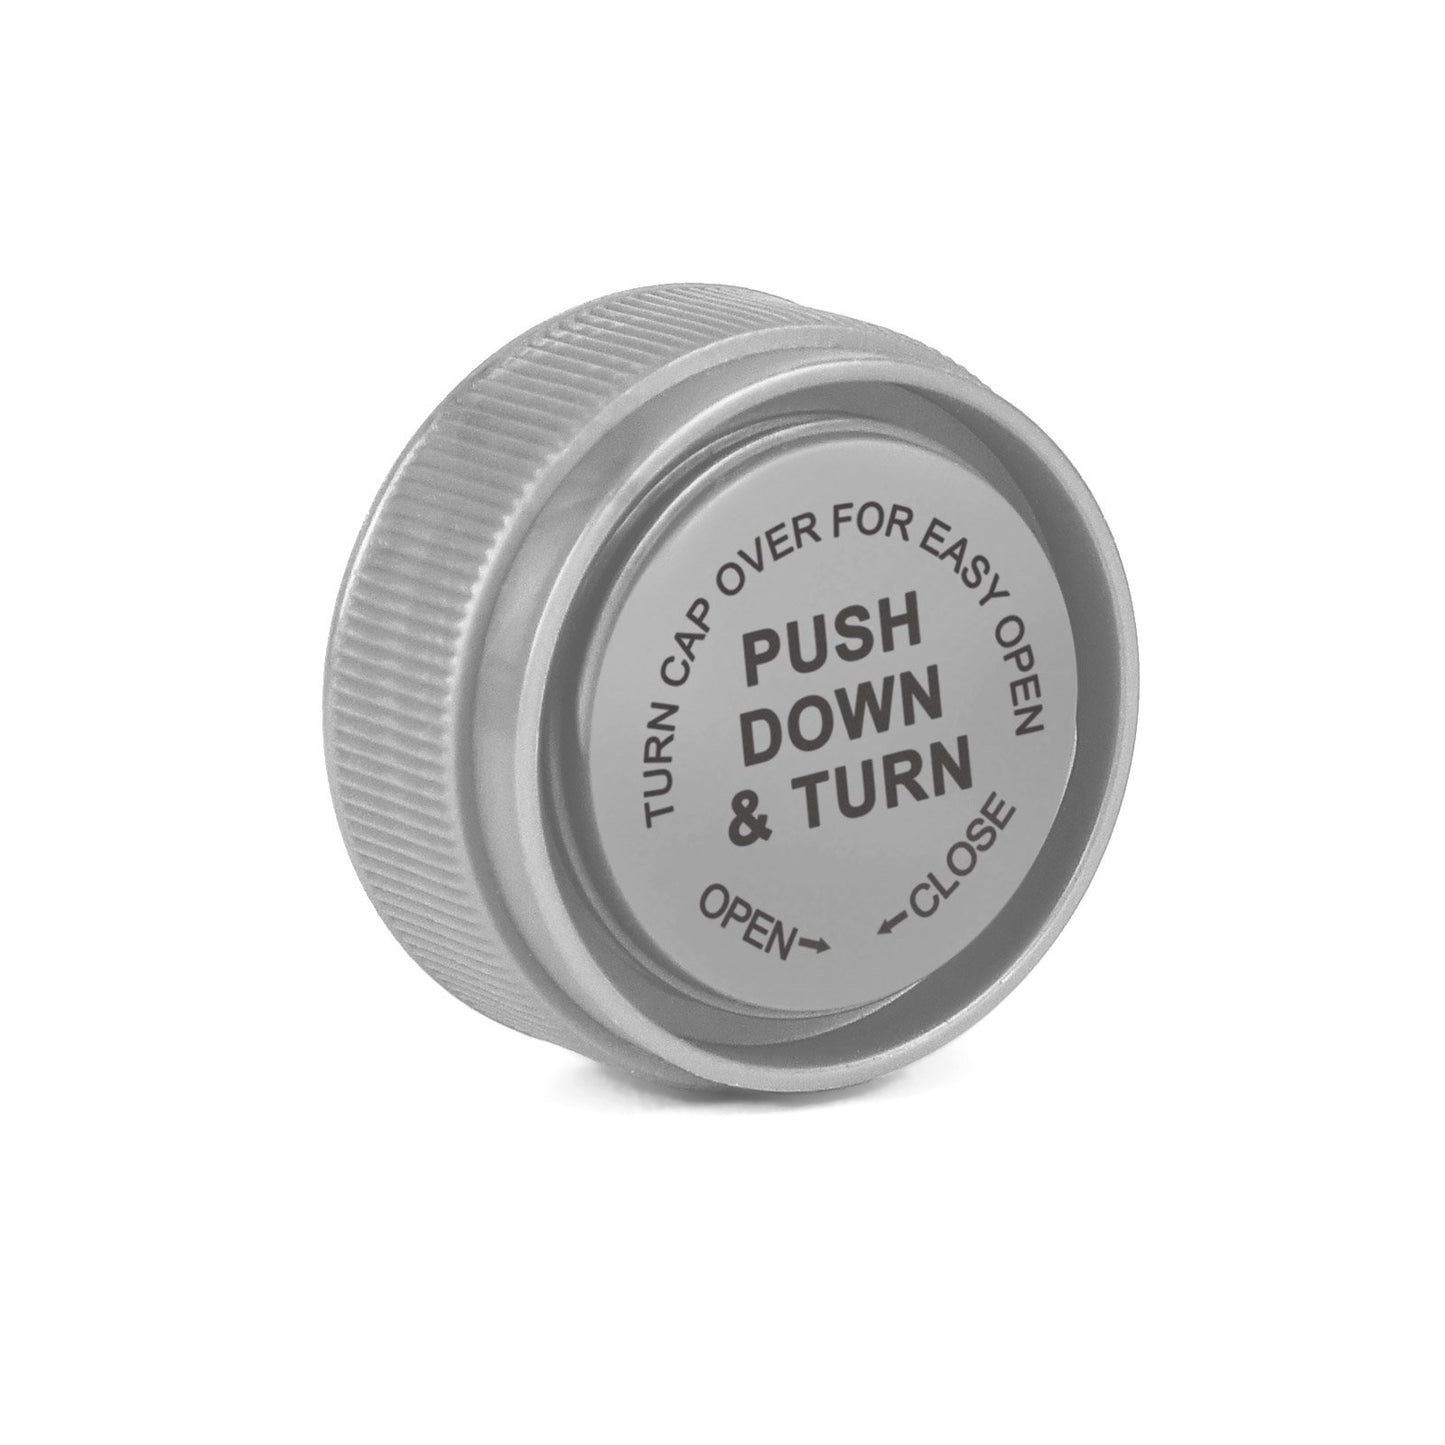 8 Dram Push Down & Turn Cap Opaque Silver - 410 COUNT